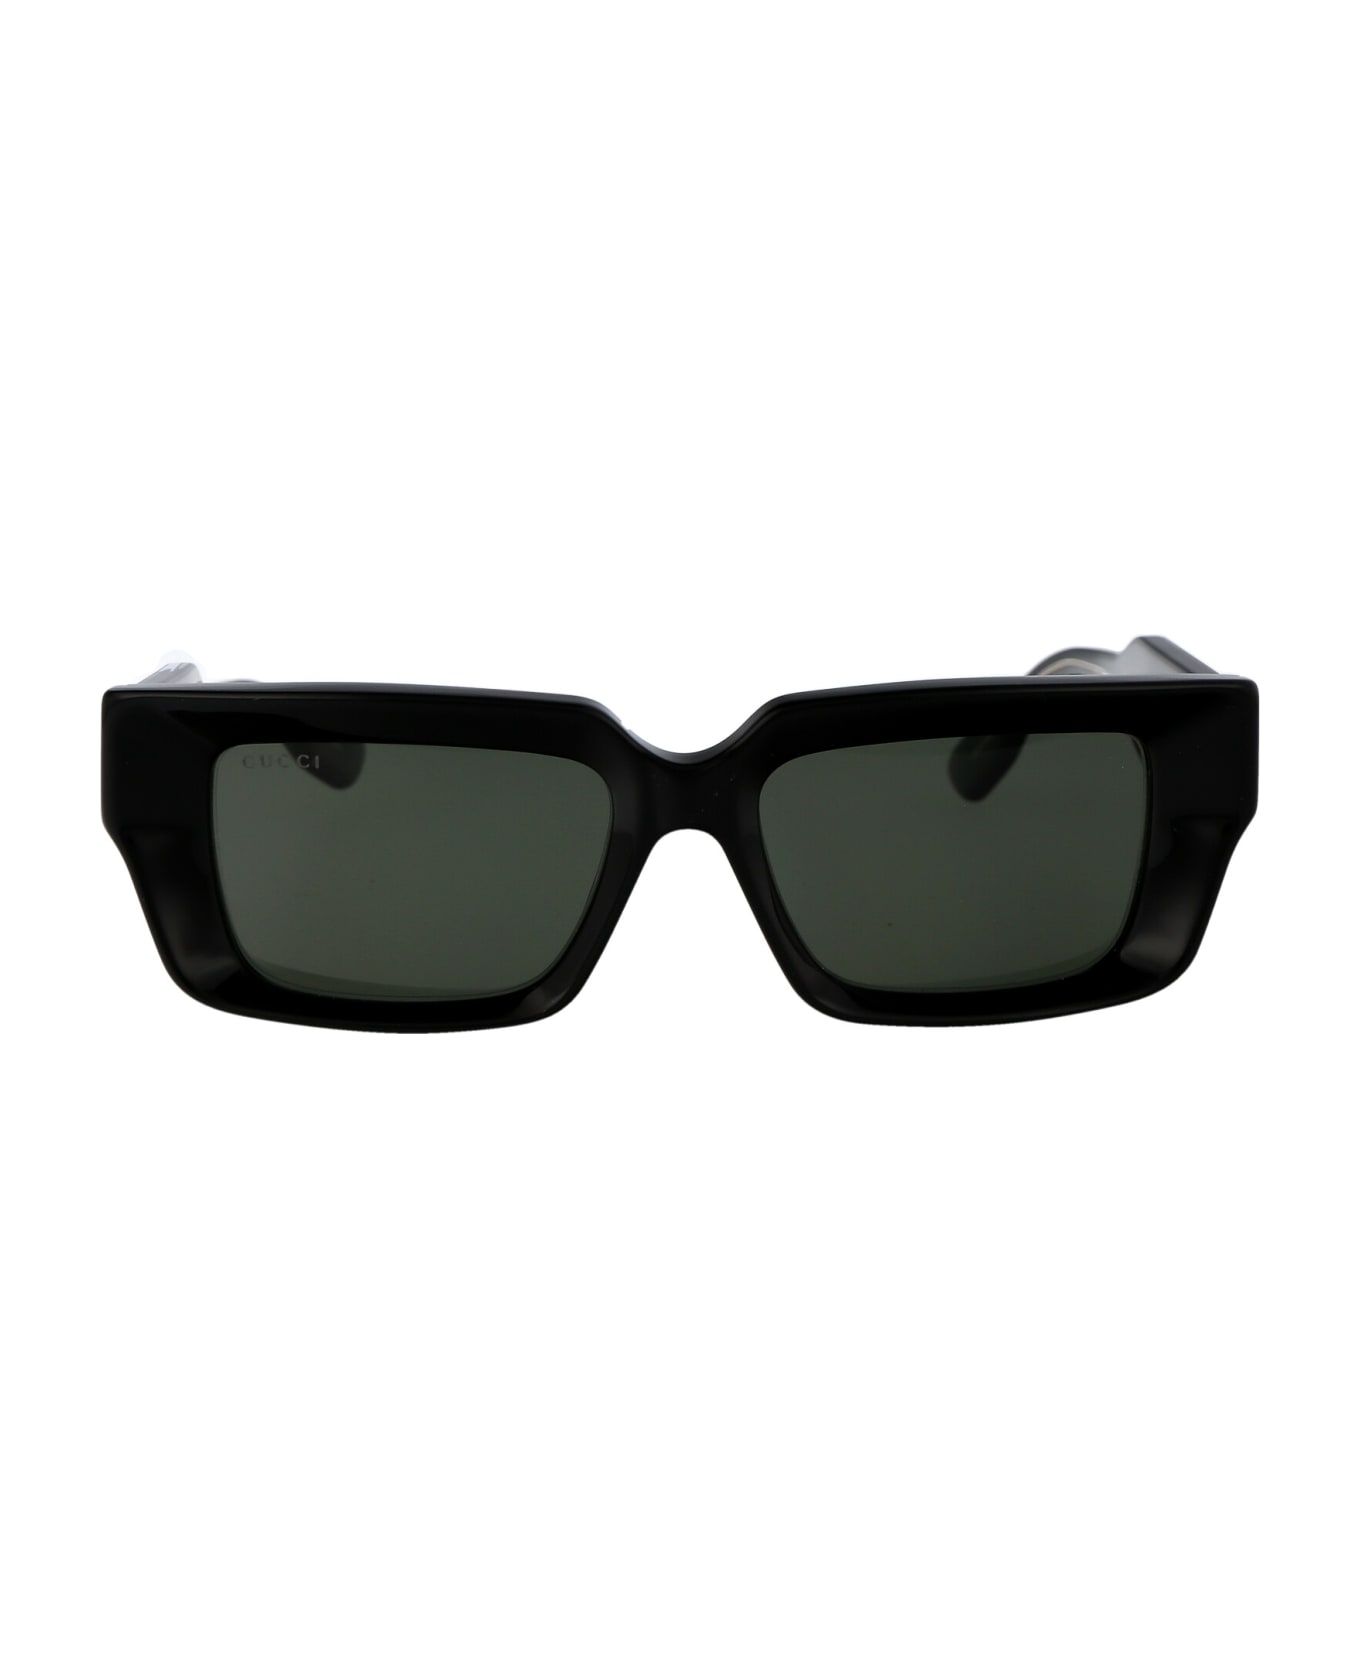 Gucci Eyewear Gg1529s Sunglasses - 001 BLACK BLACK GREY サングラス